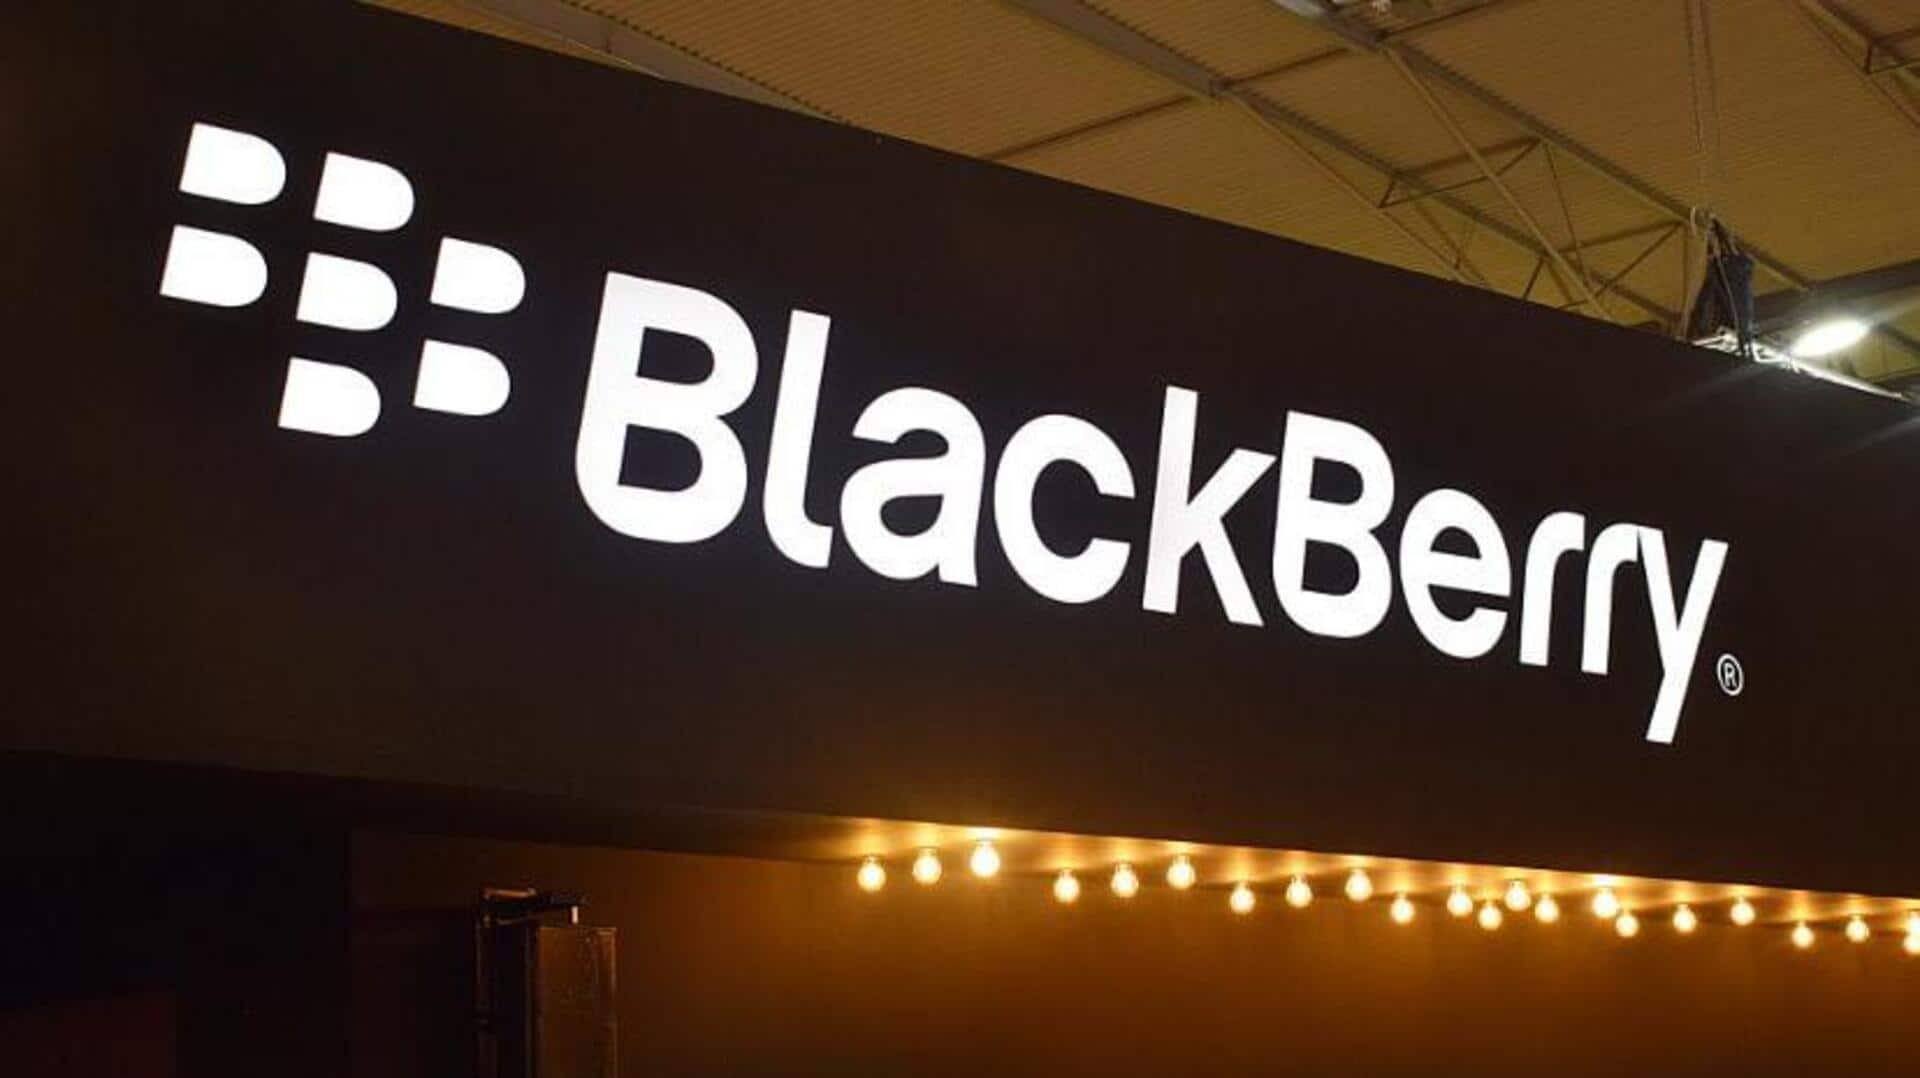 Veritas Capital bids for BlackBerry takeover; deal under strategic review